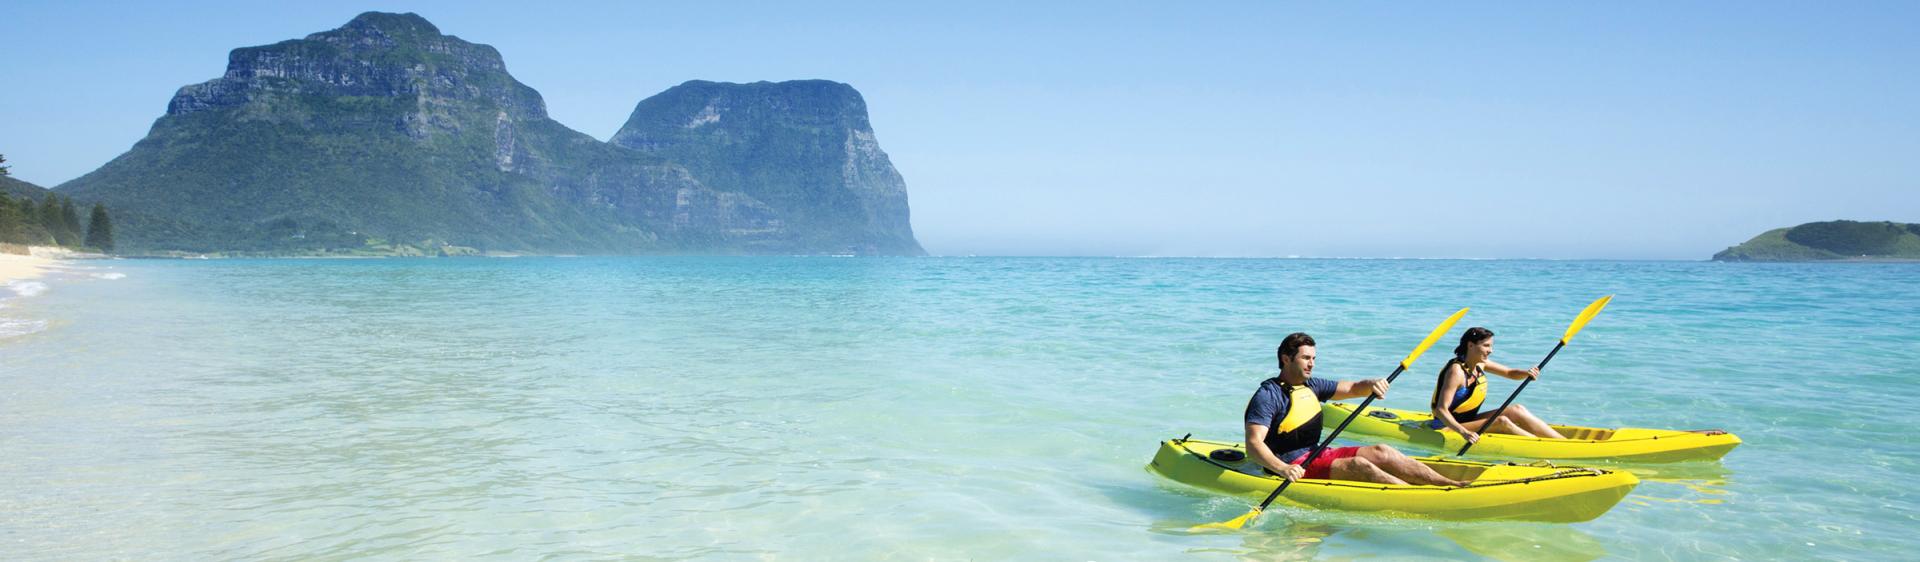 Kayaking on Lord Howe Island